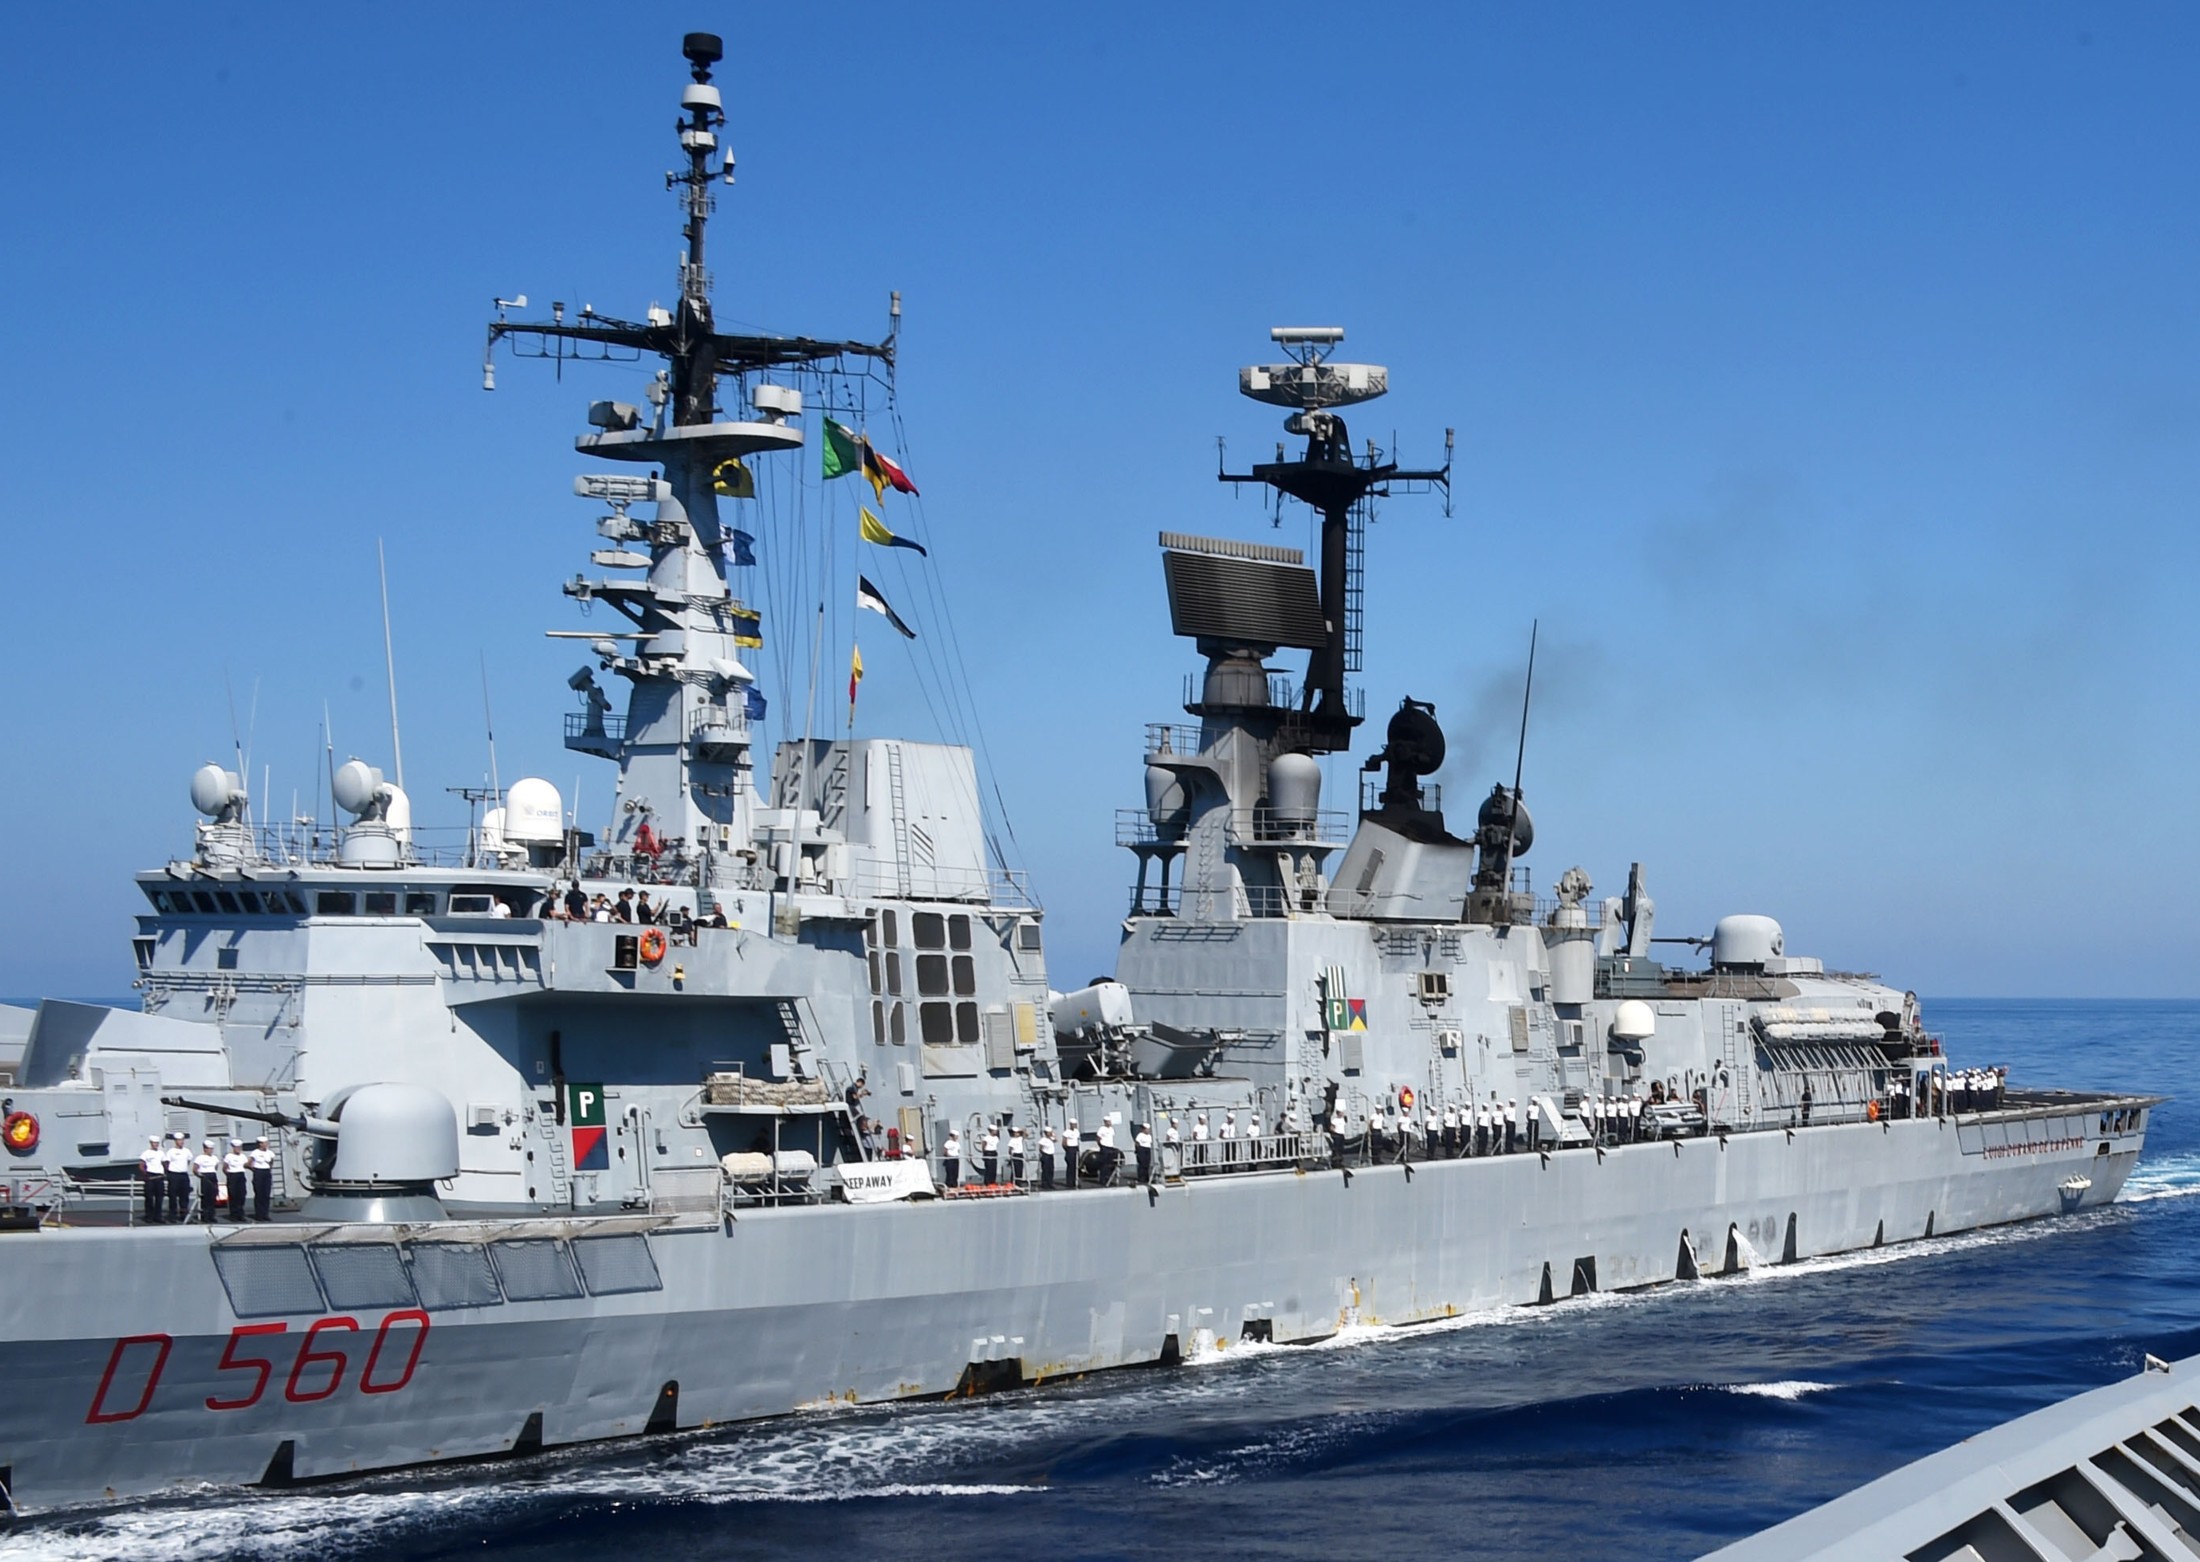 d-560 luigi durand de la penne its nave guided missile destroyer ddg italian navy marina militare 04